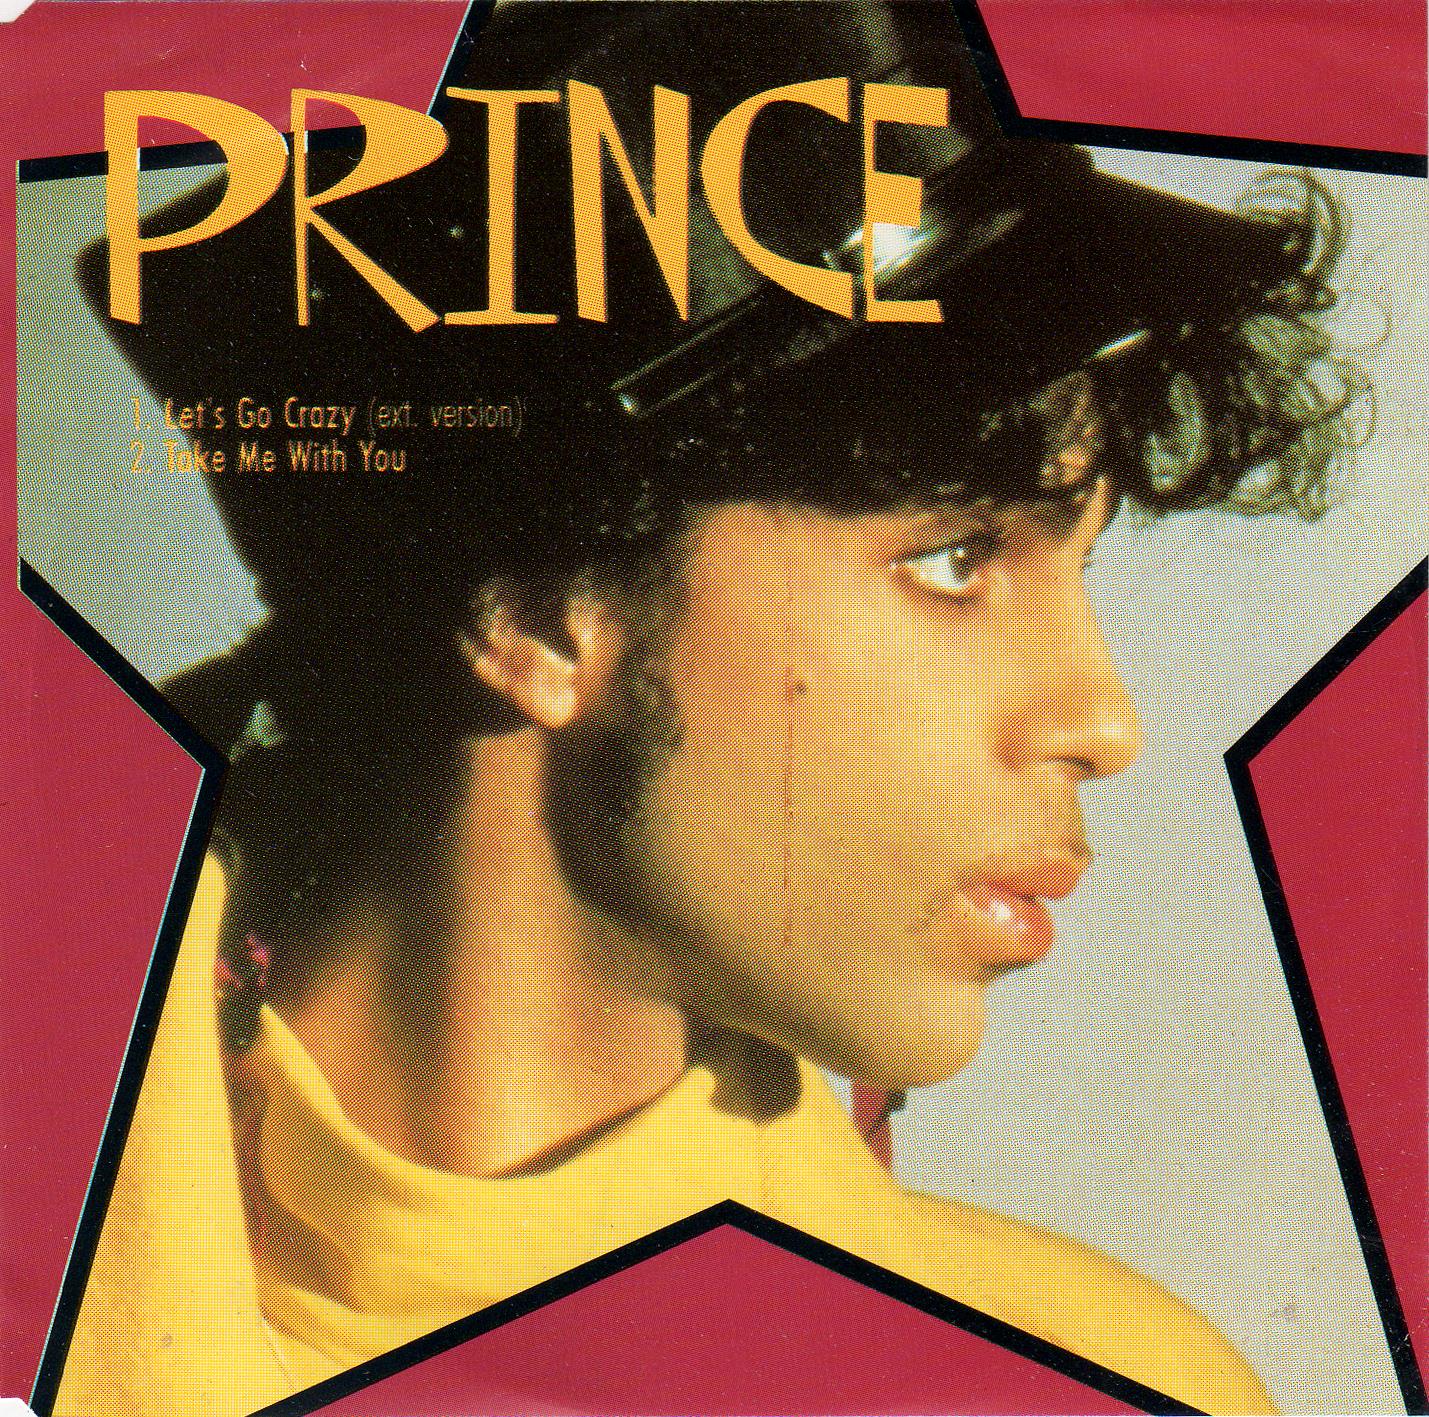 Prince - 1. Let's Go Crazy 2. Take Me With You (Cdm)(1989)